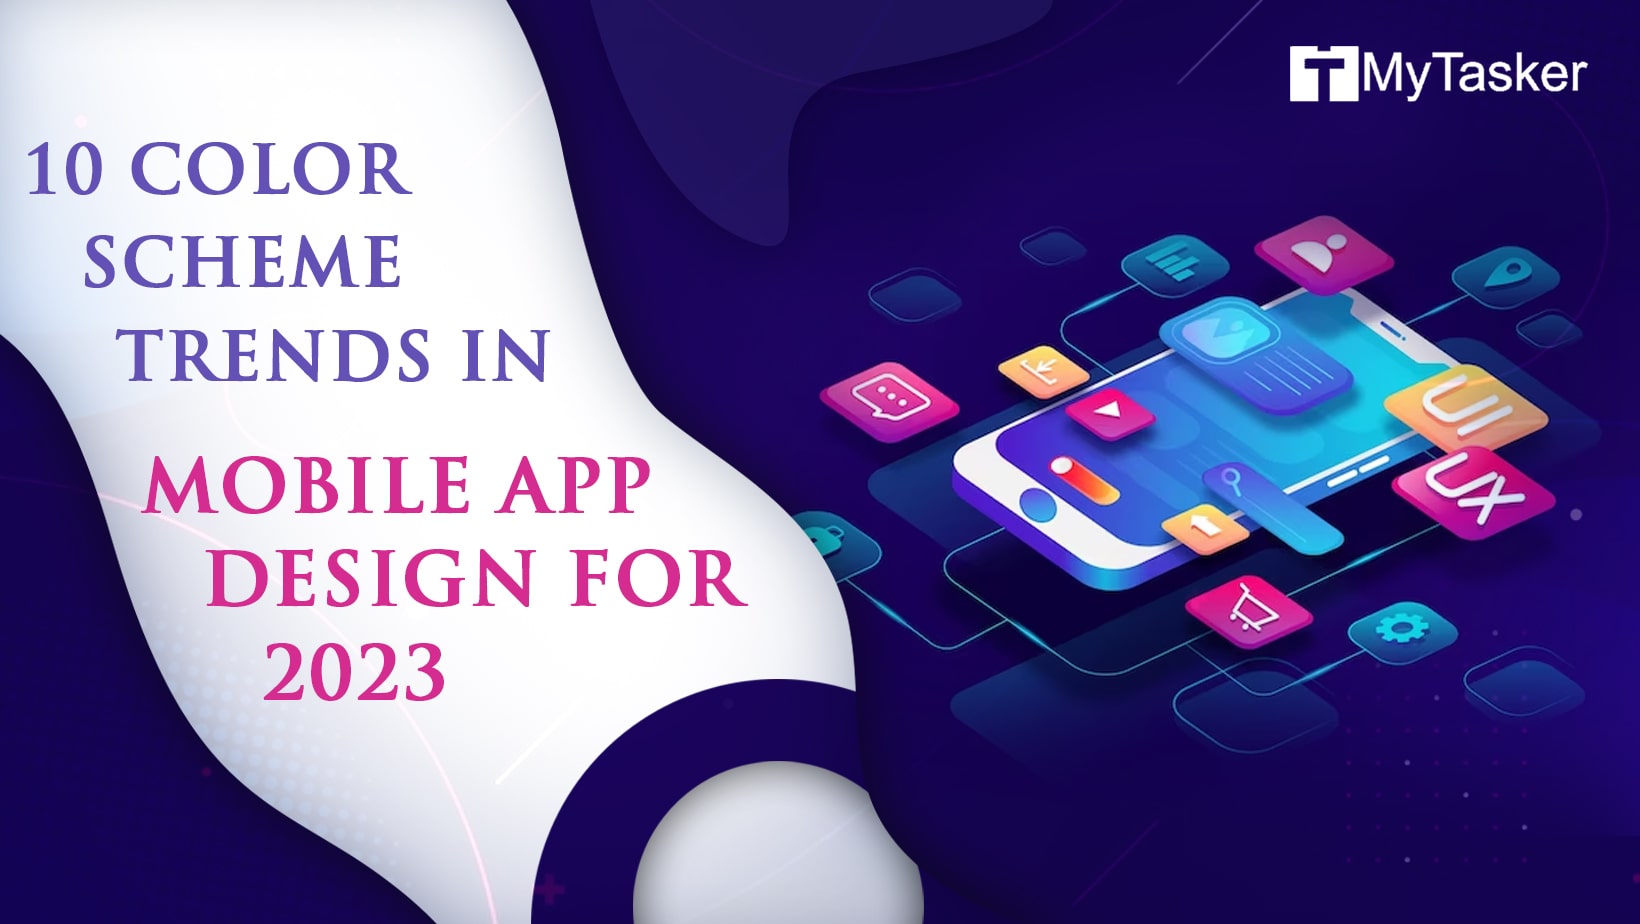 10 Color Scheme Trends in Mobile App Design for 2023